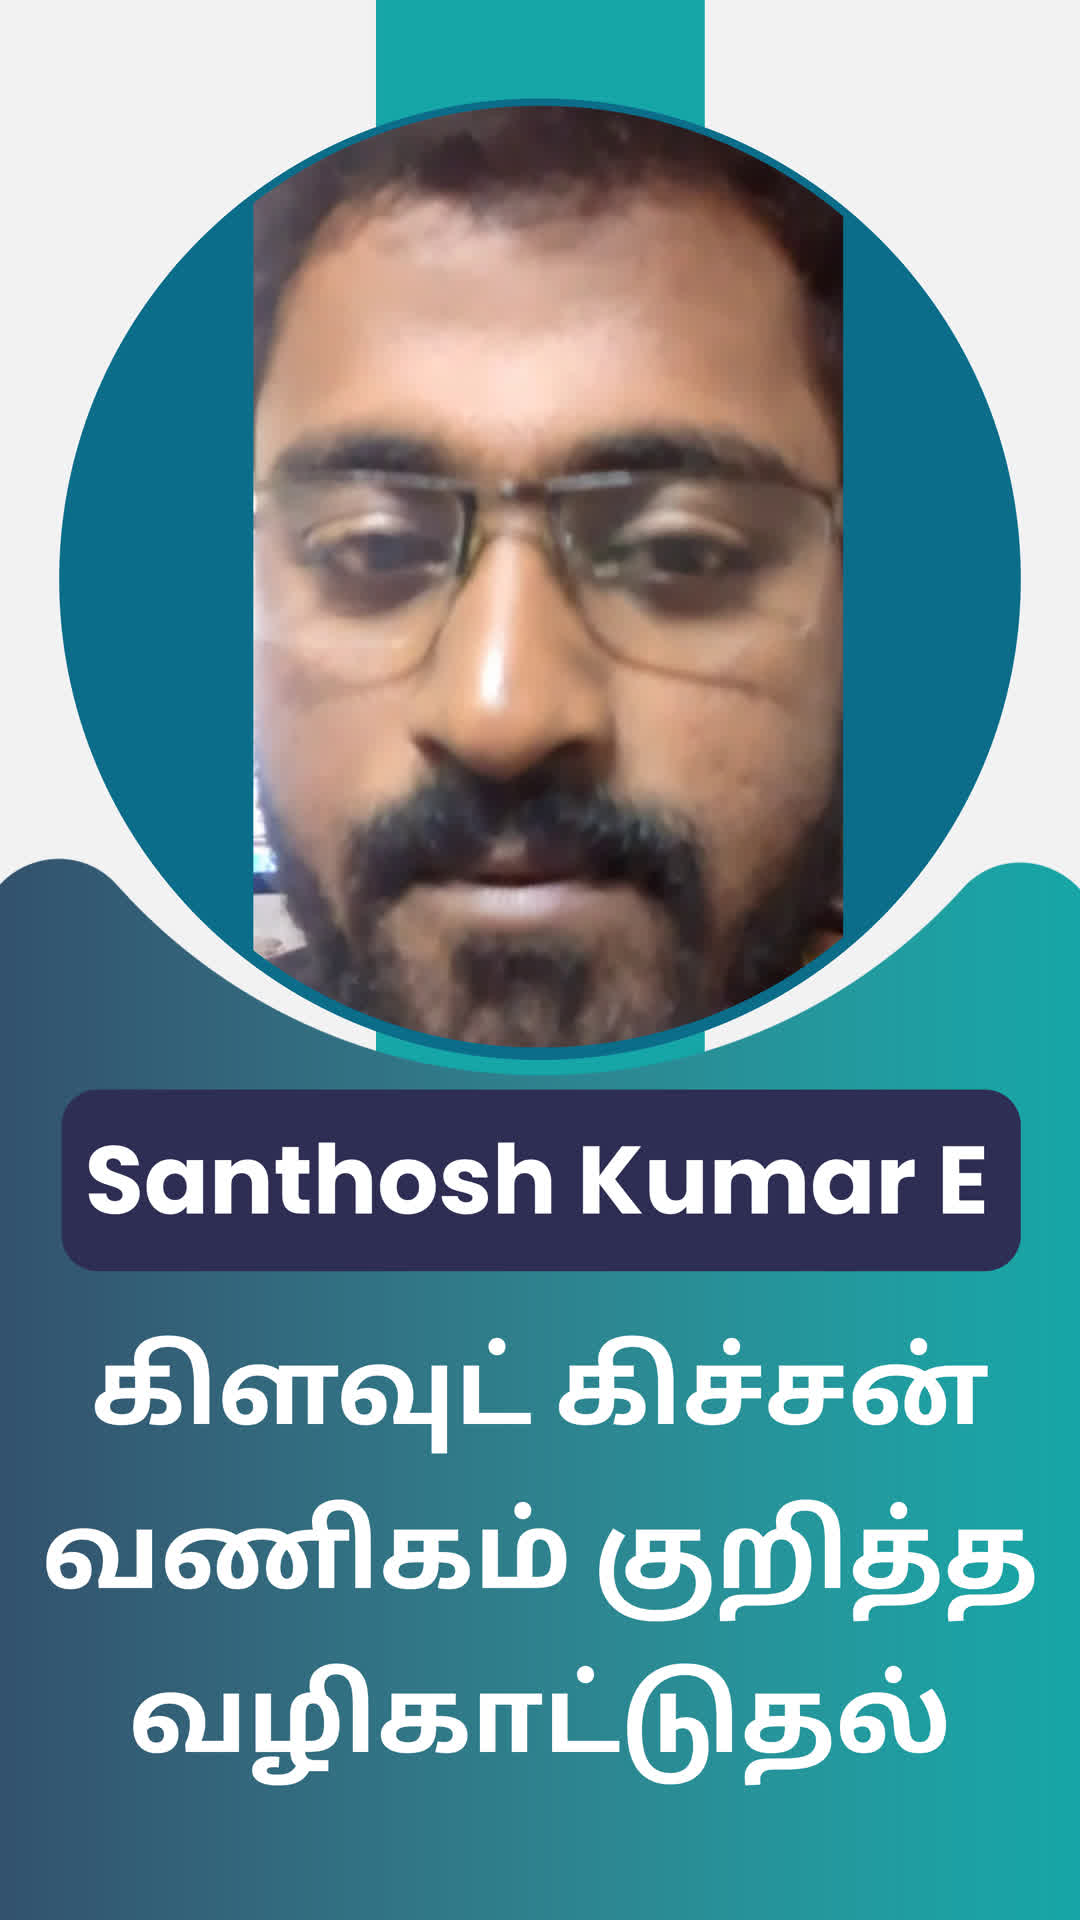 Santhosh kumar E's Honest Review of ffreedom app - Chengalpattu ,Tamil Nadu